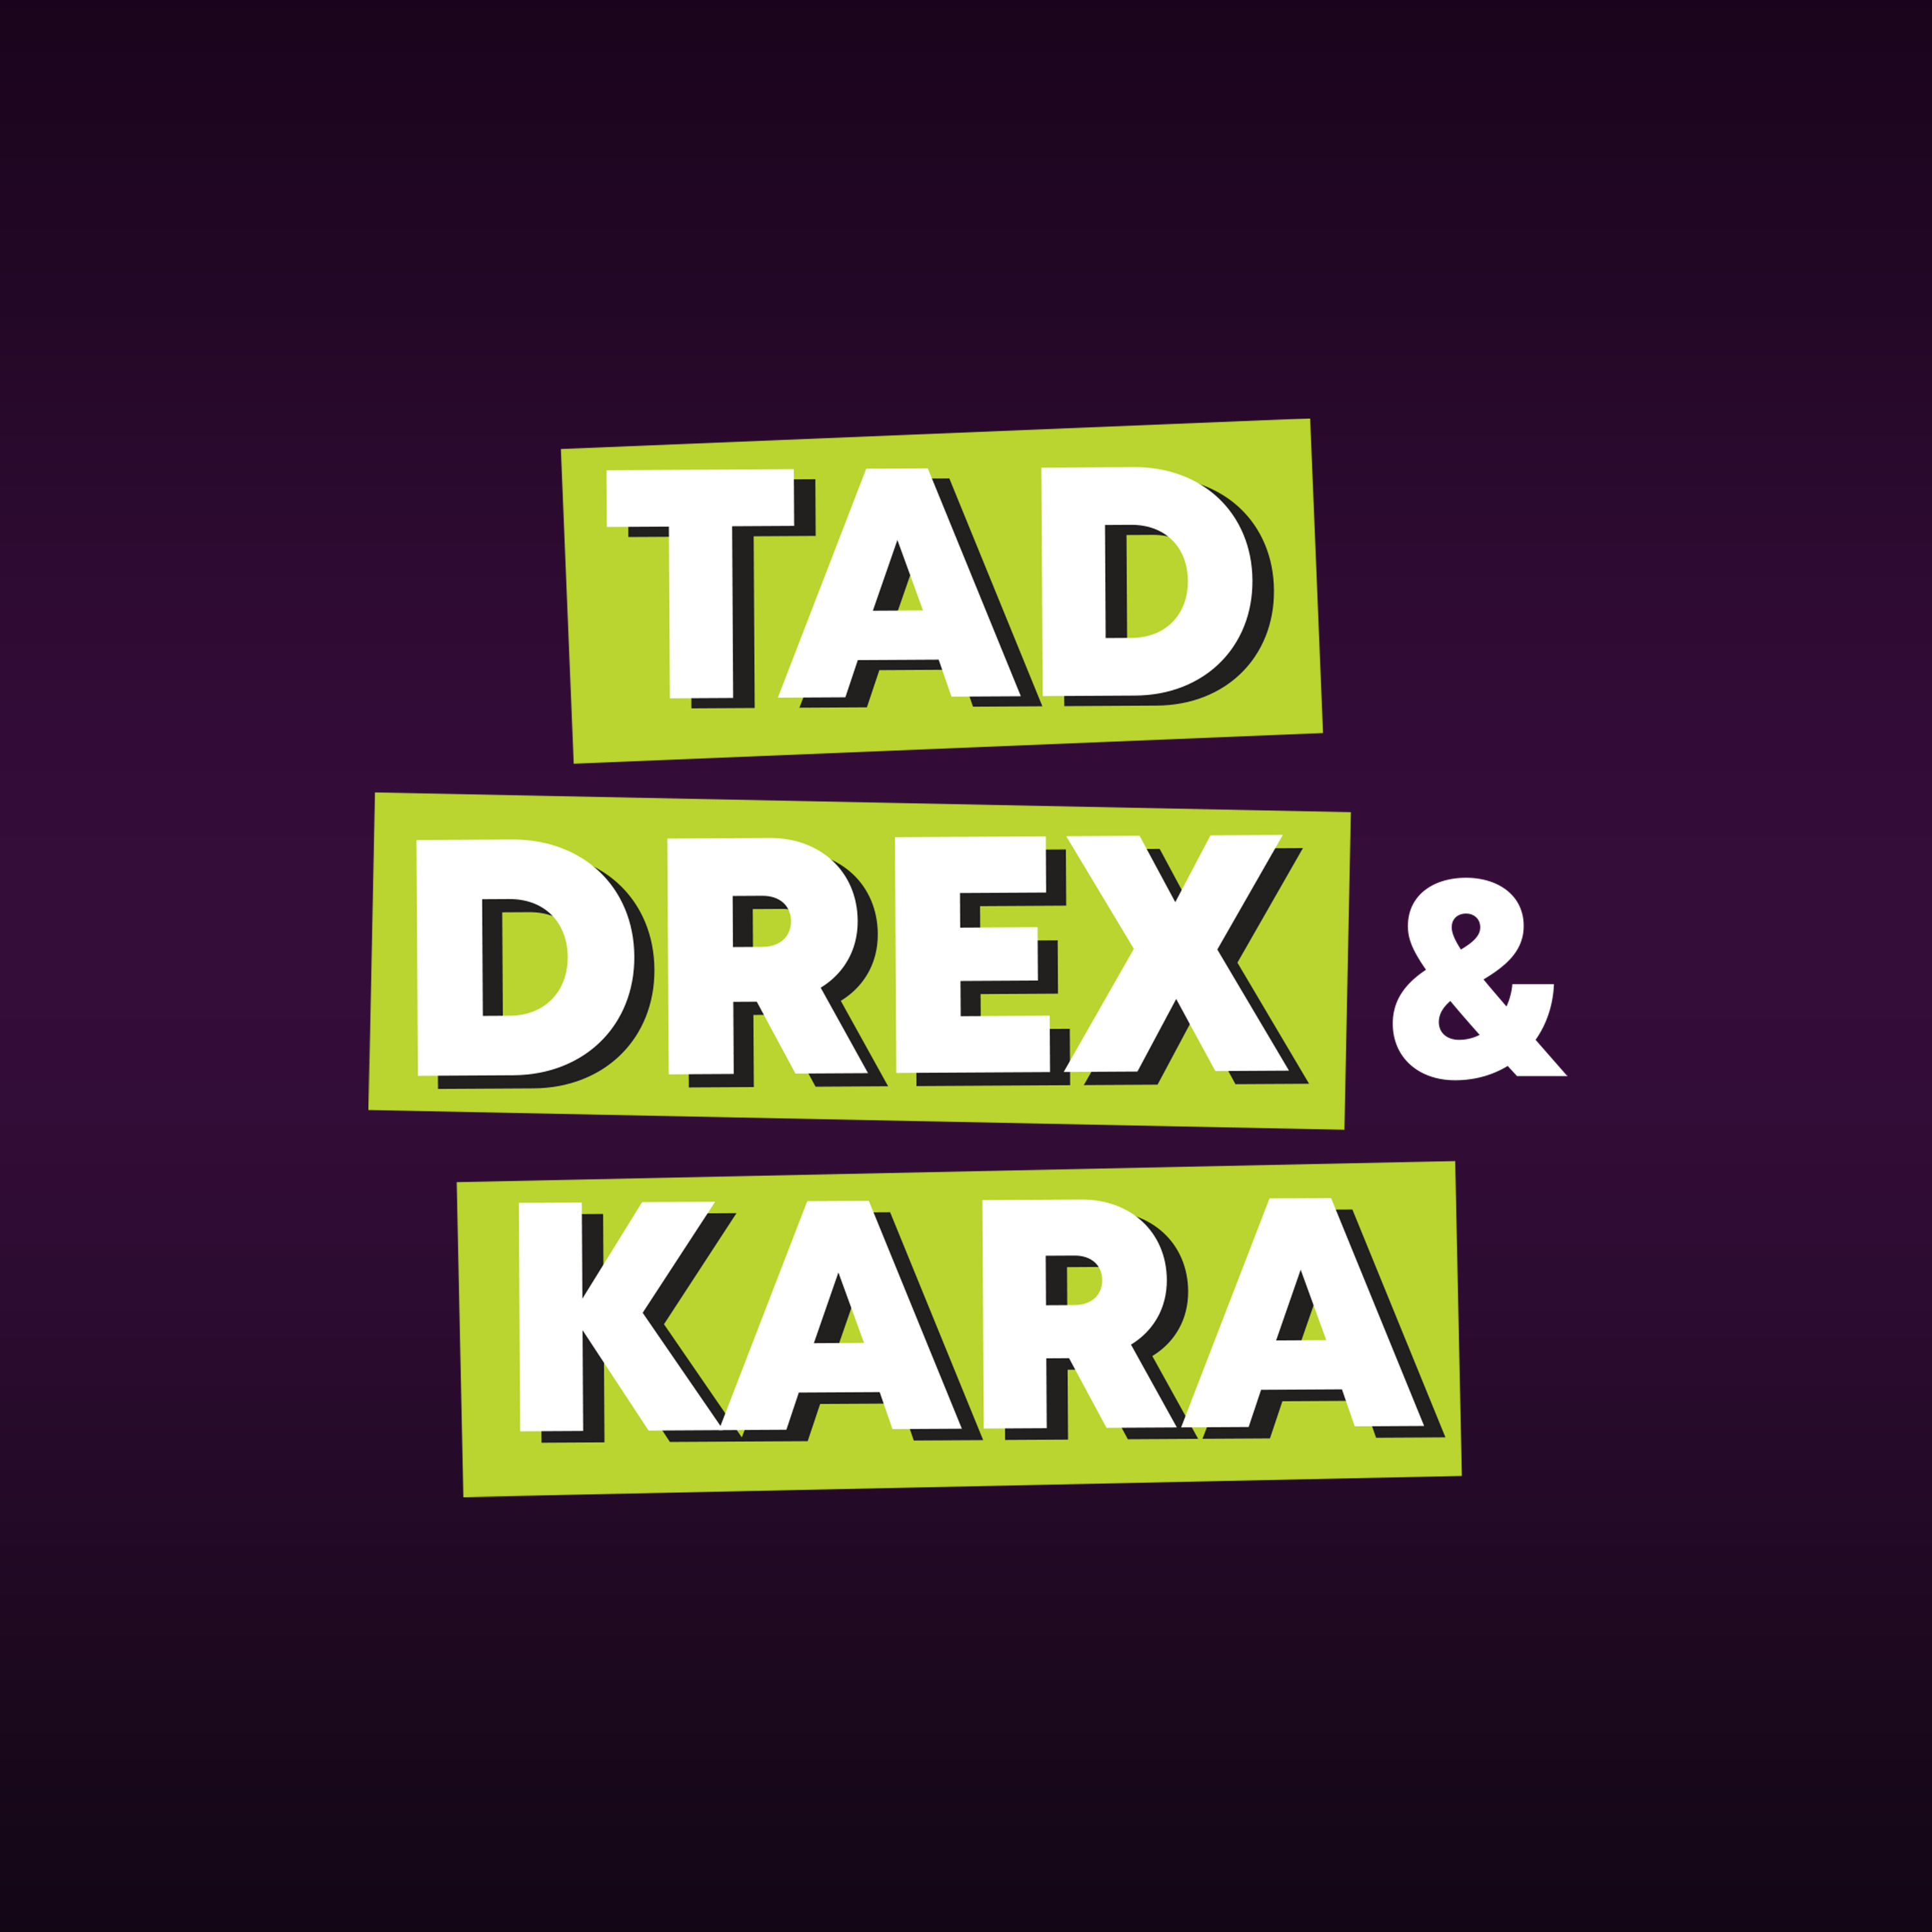 Tad Drex & Kara On-Demand